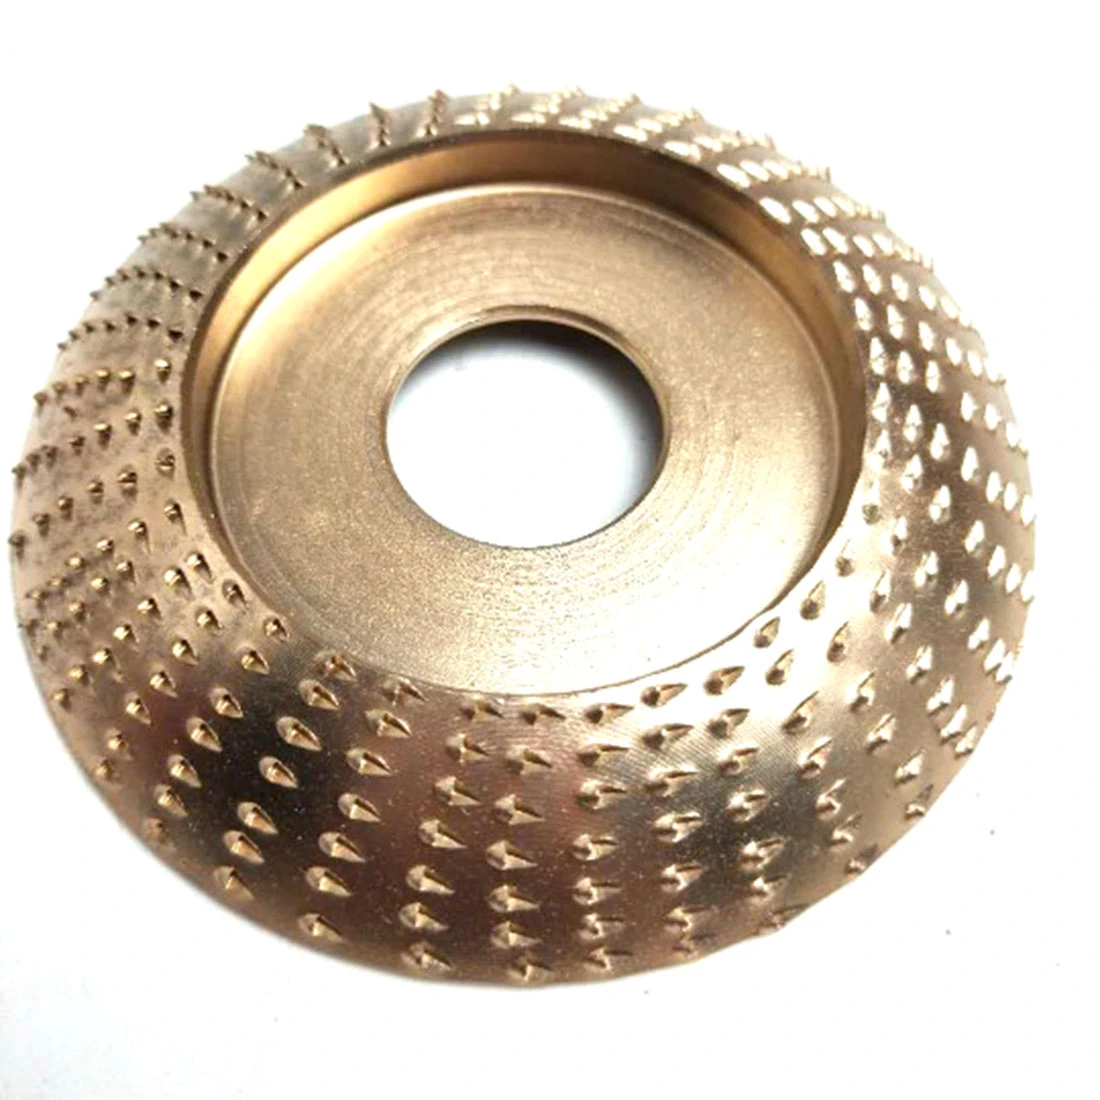 Grinder/Grinding Wheel Angle Carbide Wood Sanding Carving Shaping Disc Abrasive